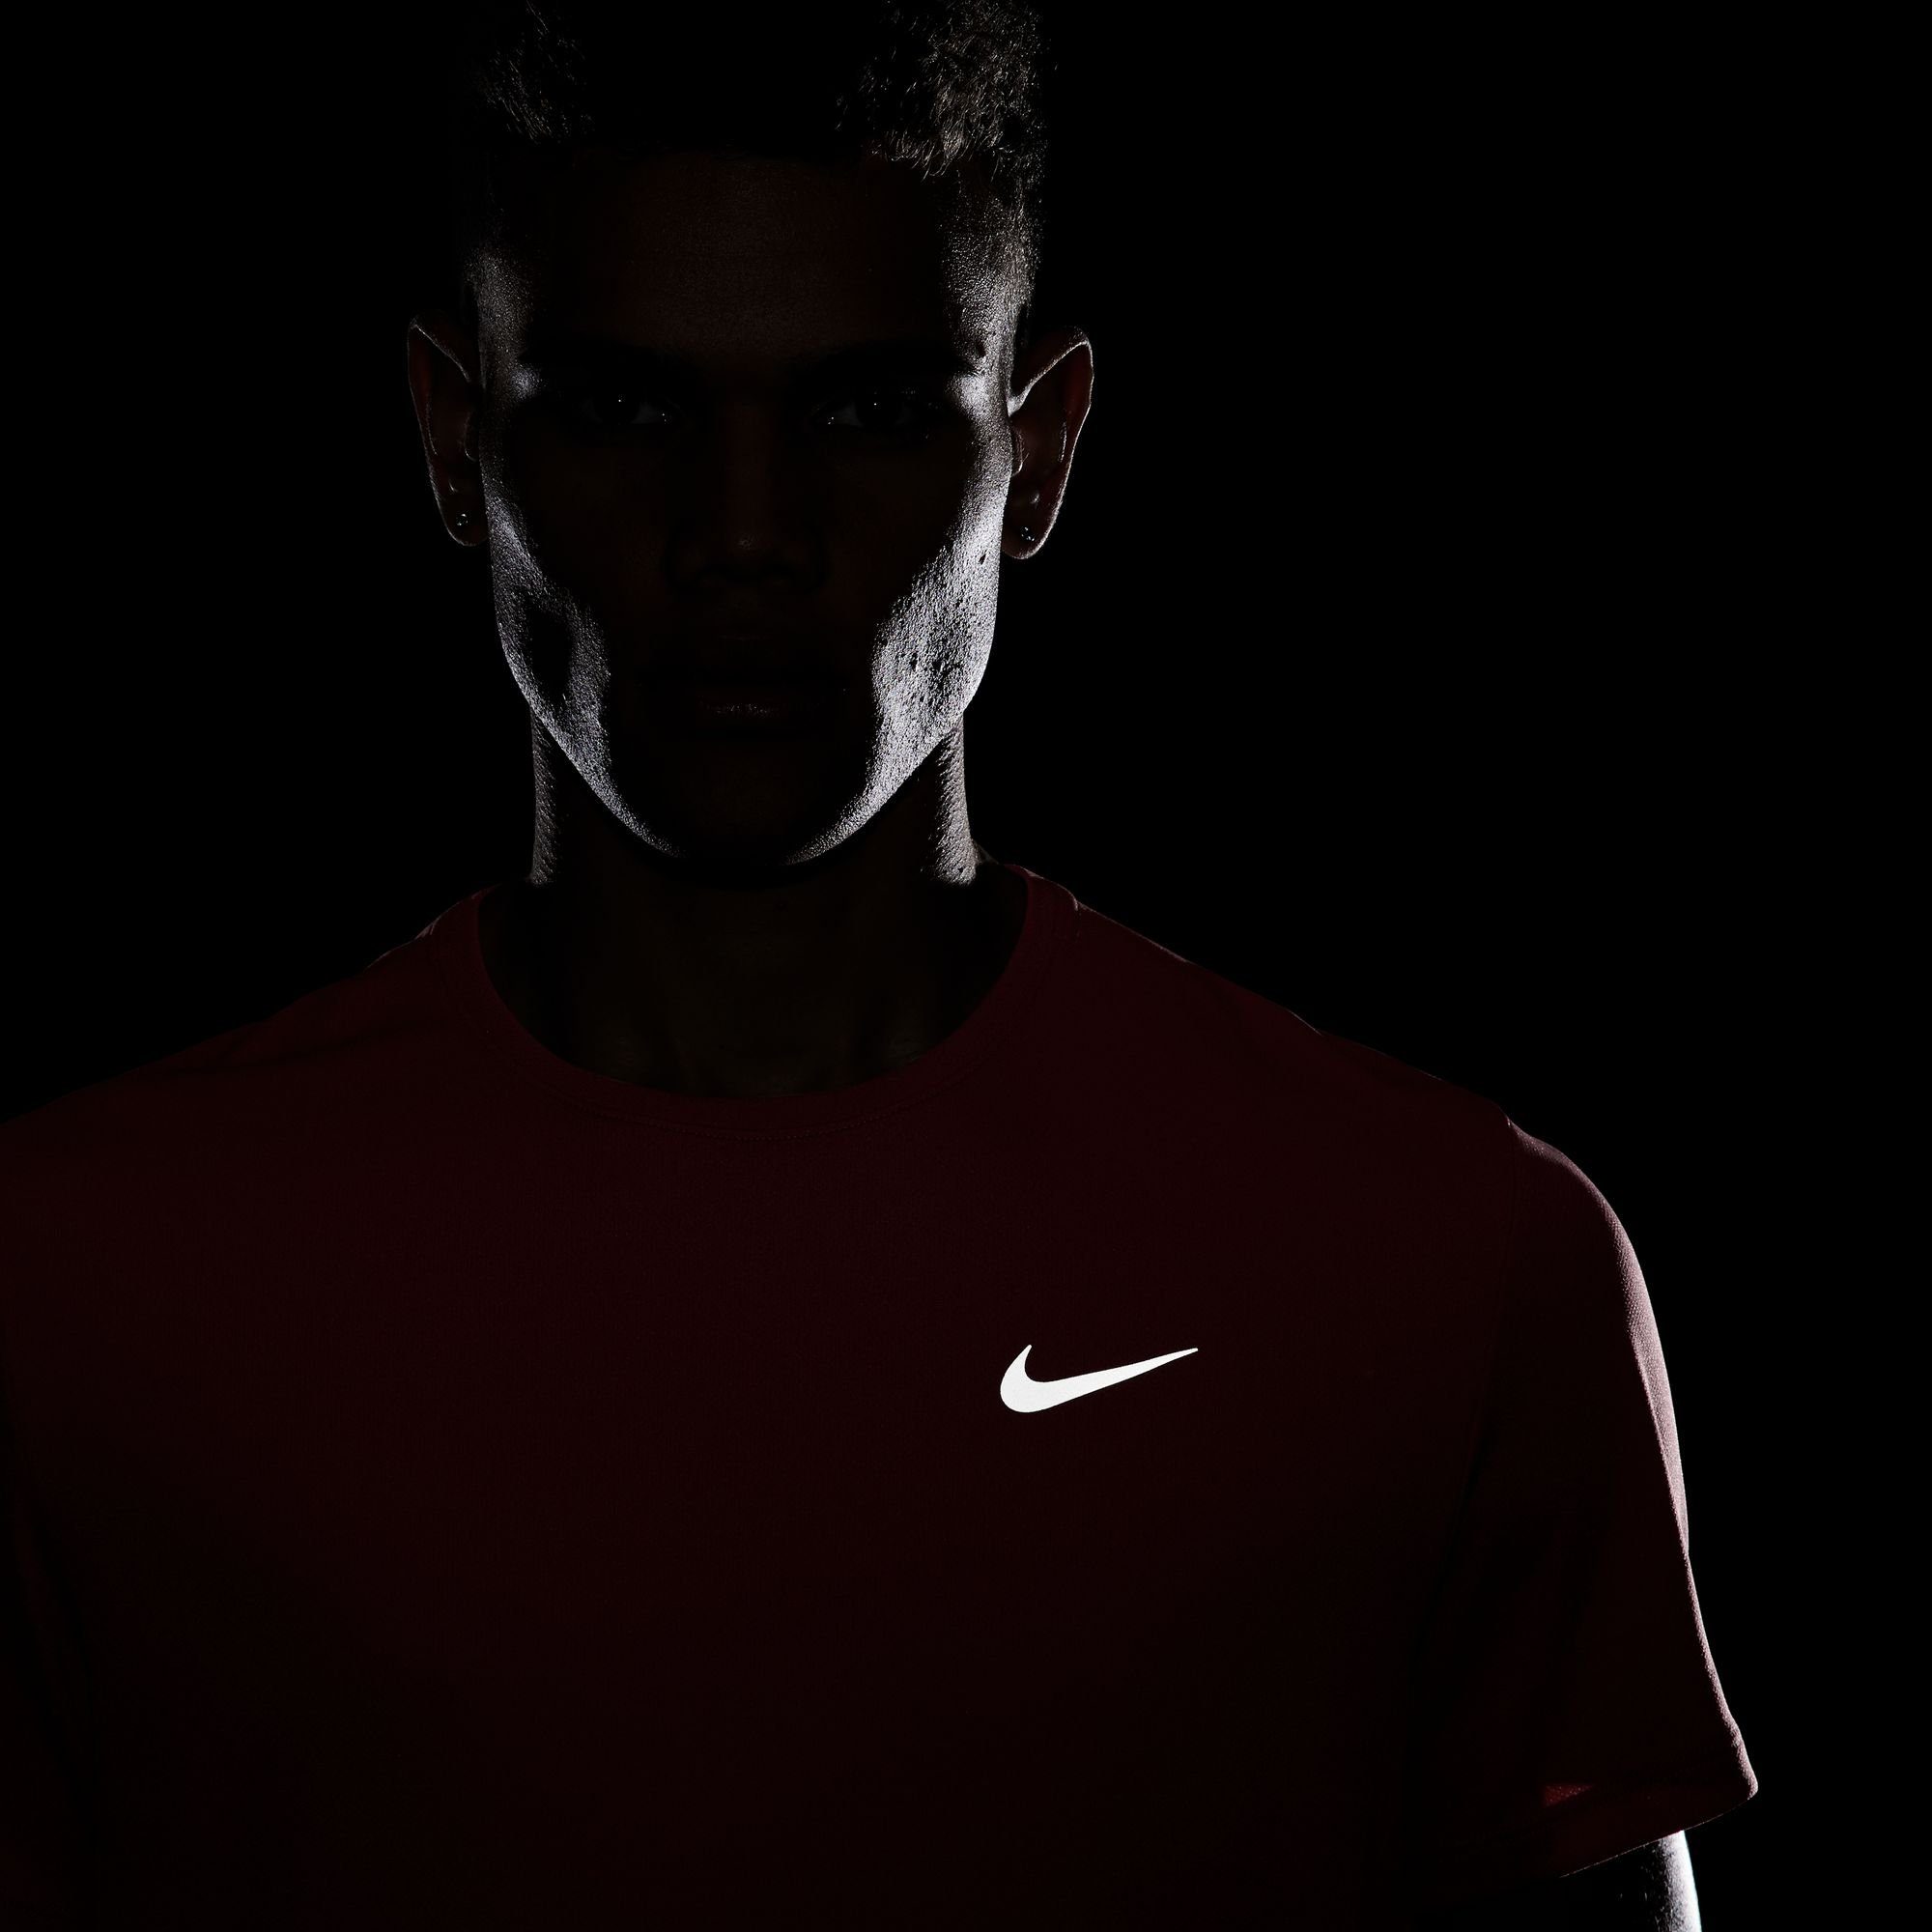 Nike MEN'S TOP ADOBE/REFLECTIVE DRI-FIT Laufshirt UV RUNNING SHORT-SLEEVE MILER SILV